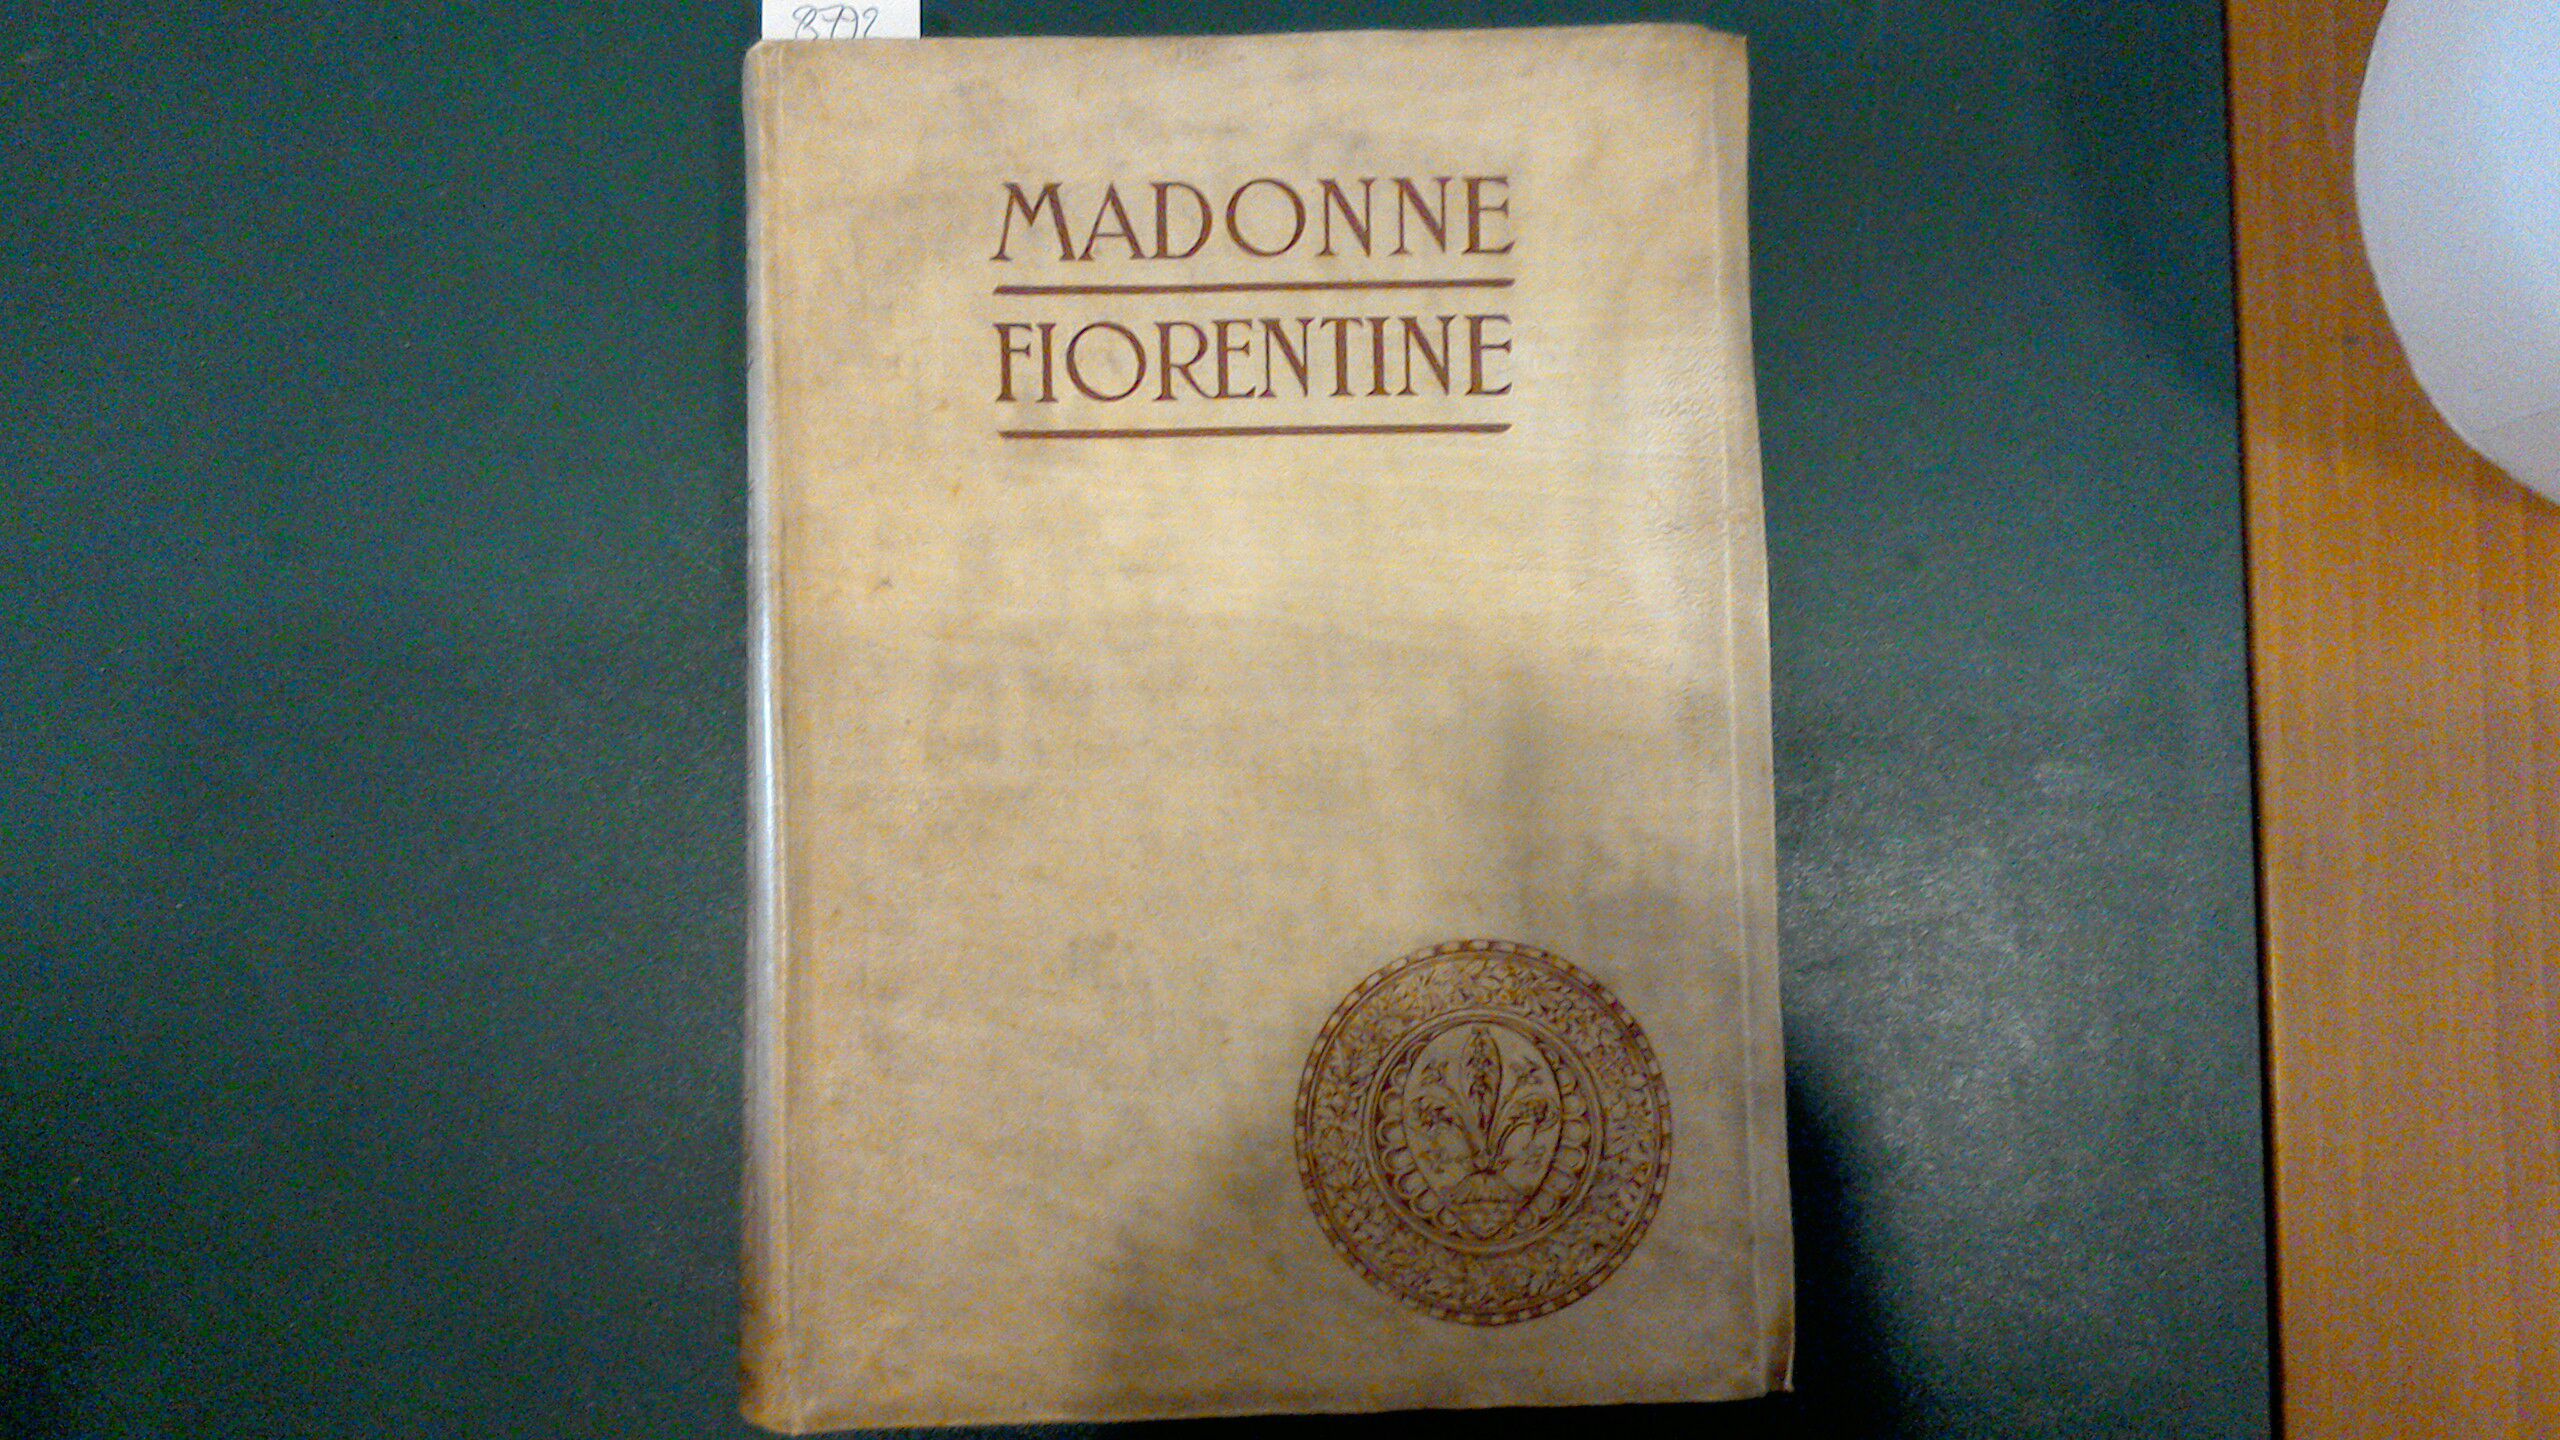 Madonne fiorentine